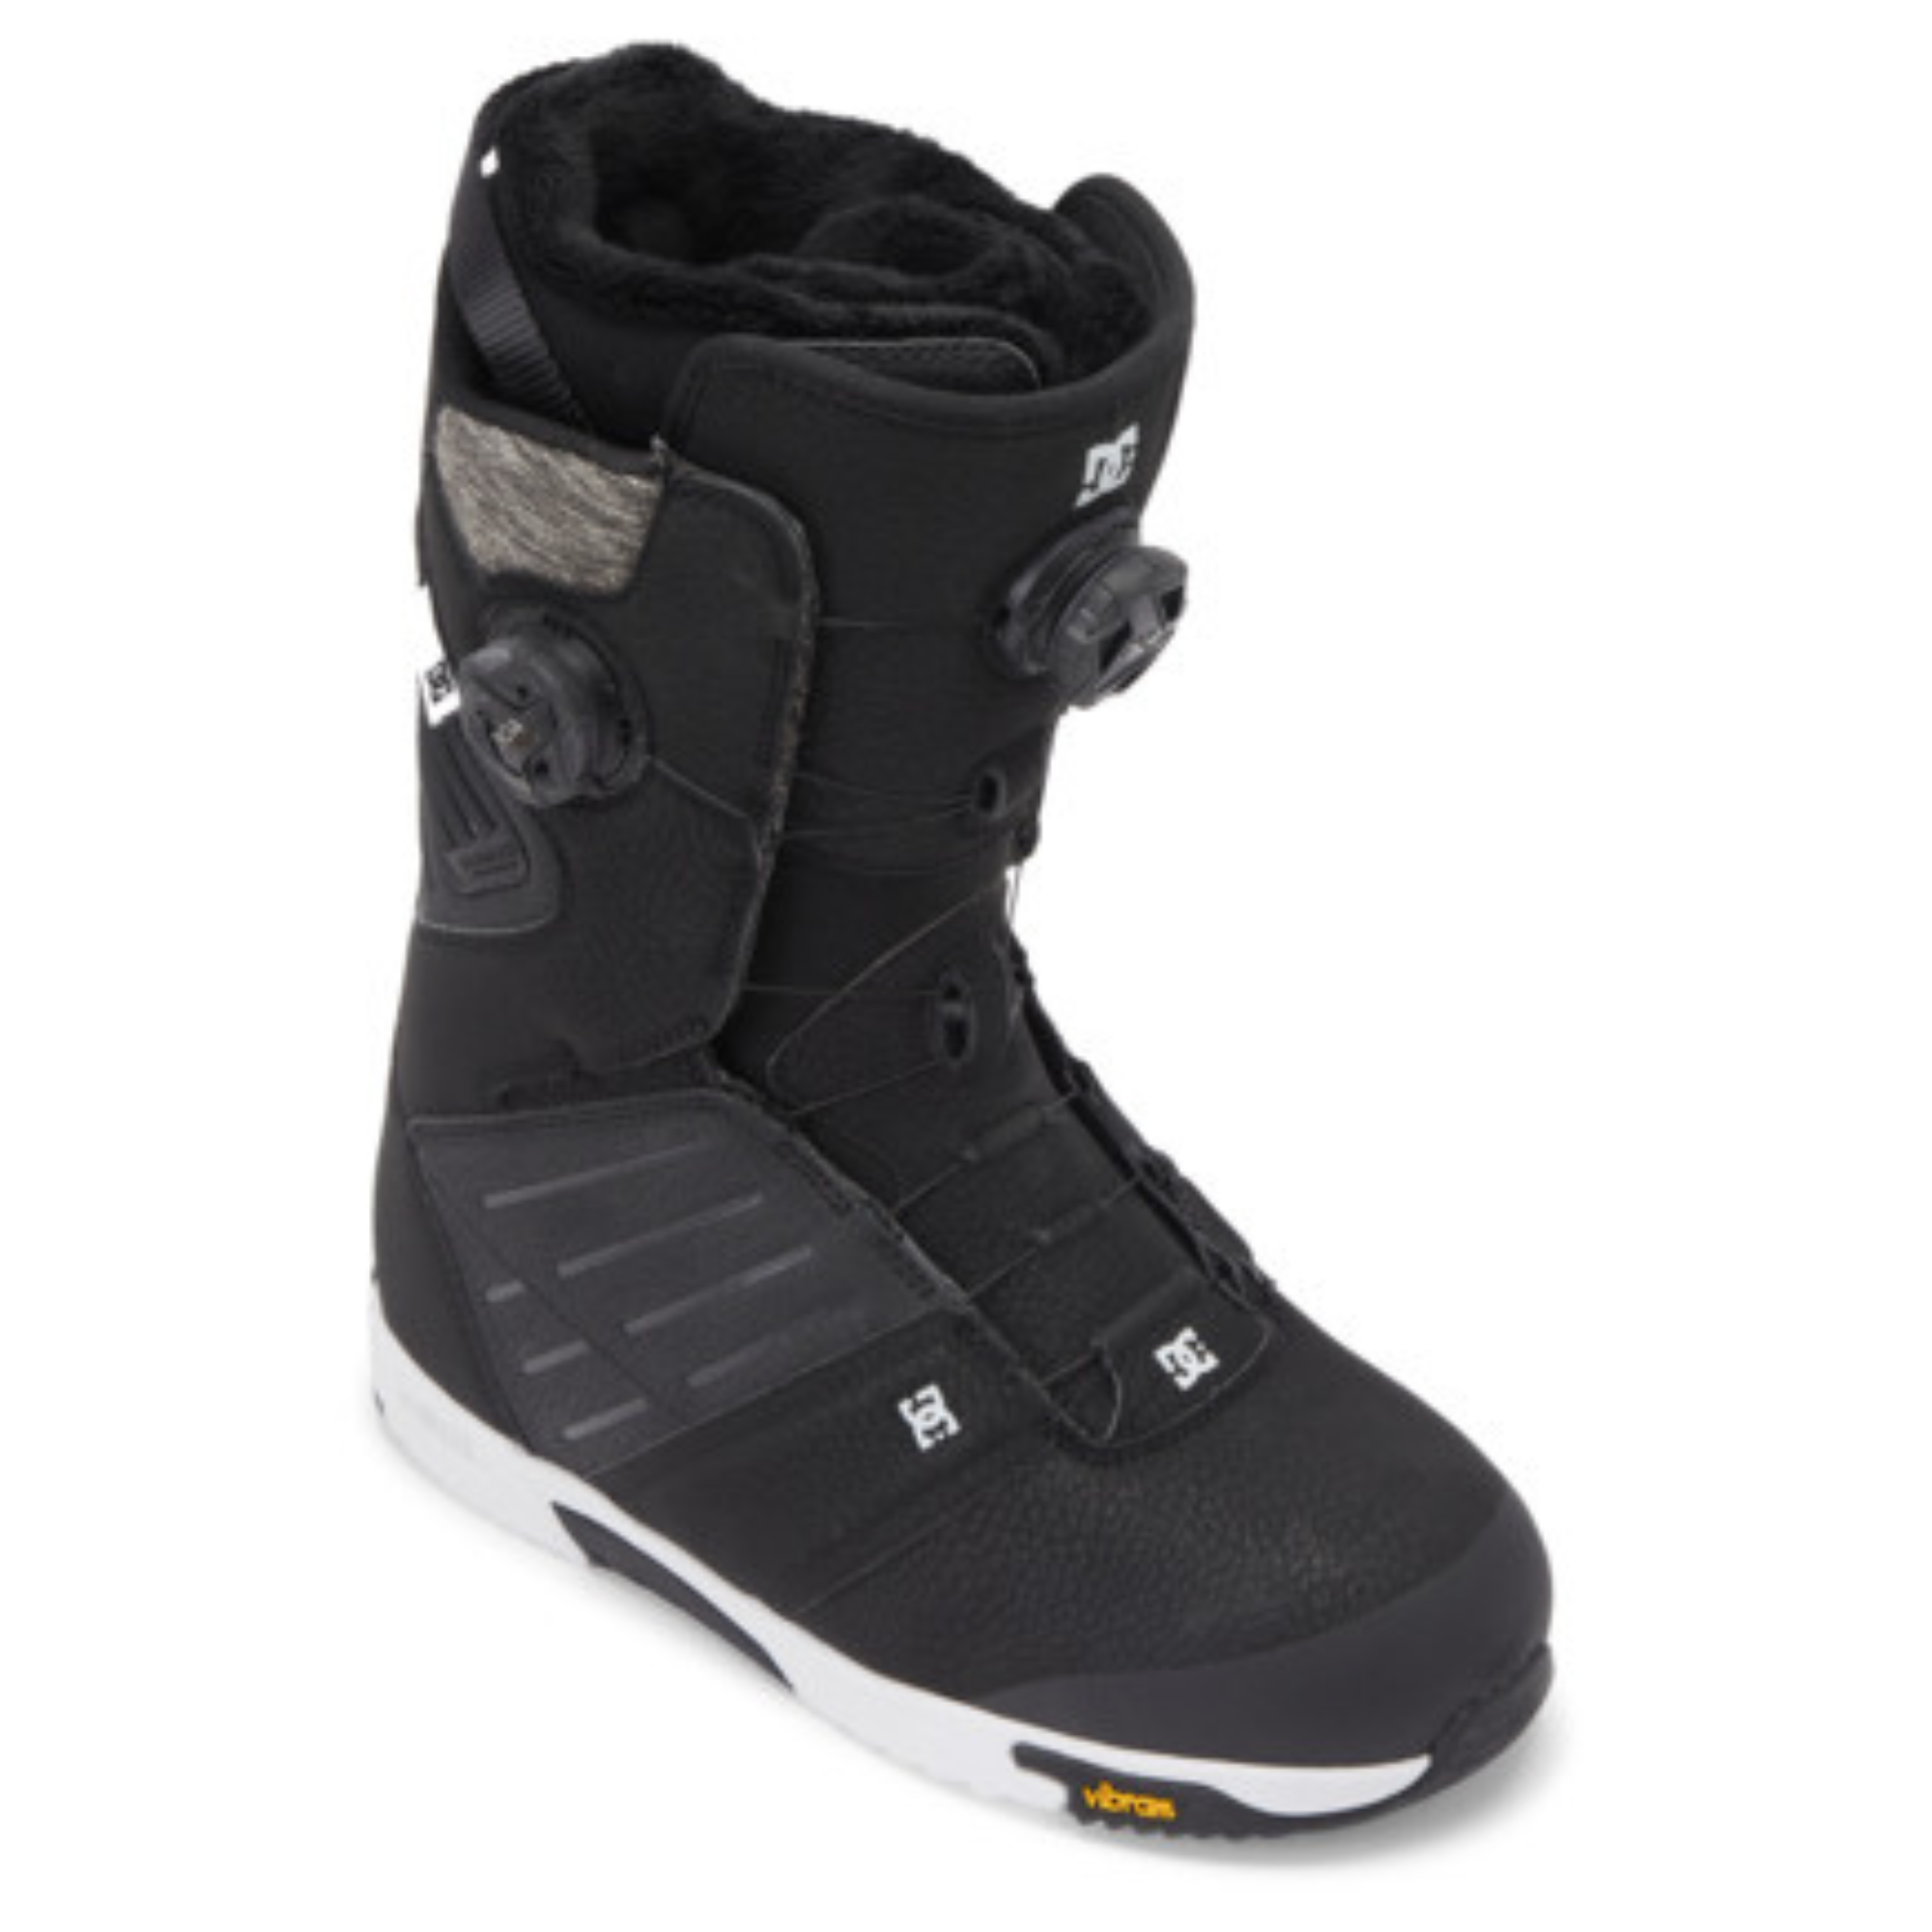 DC Men's Judge Snowboard Boots - Black / White